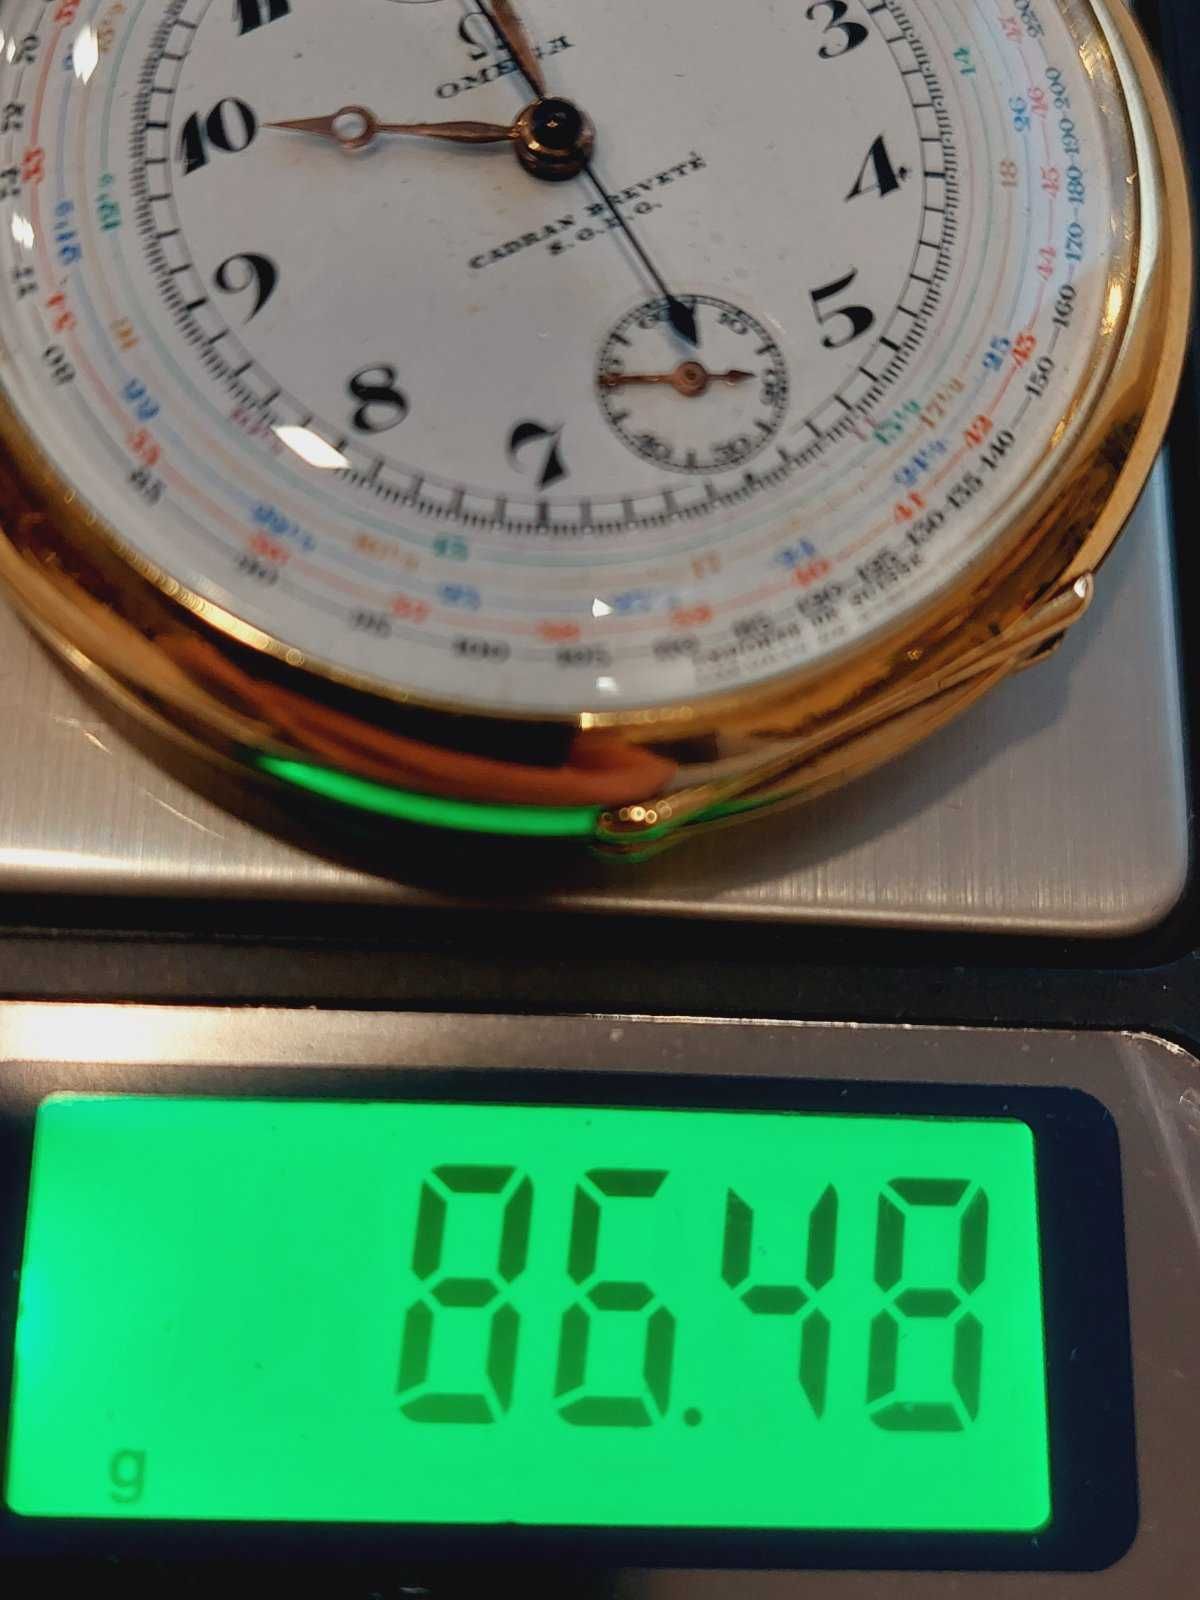 Ceas Omega cronograf Aur 18k.  Omega crono-tahimetru Rare aur de 18 k.